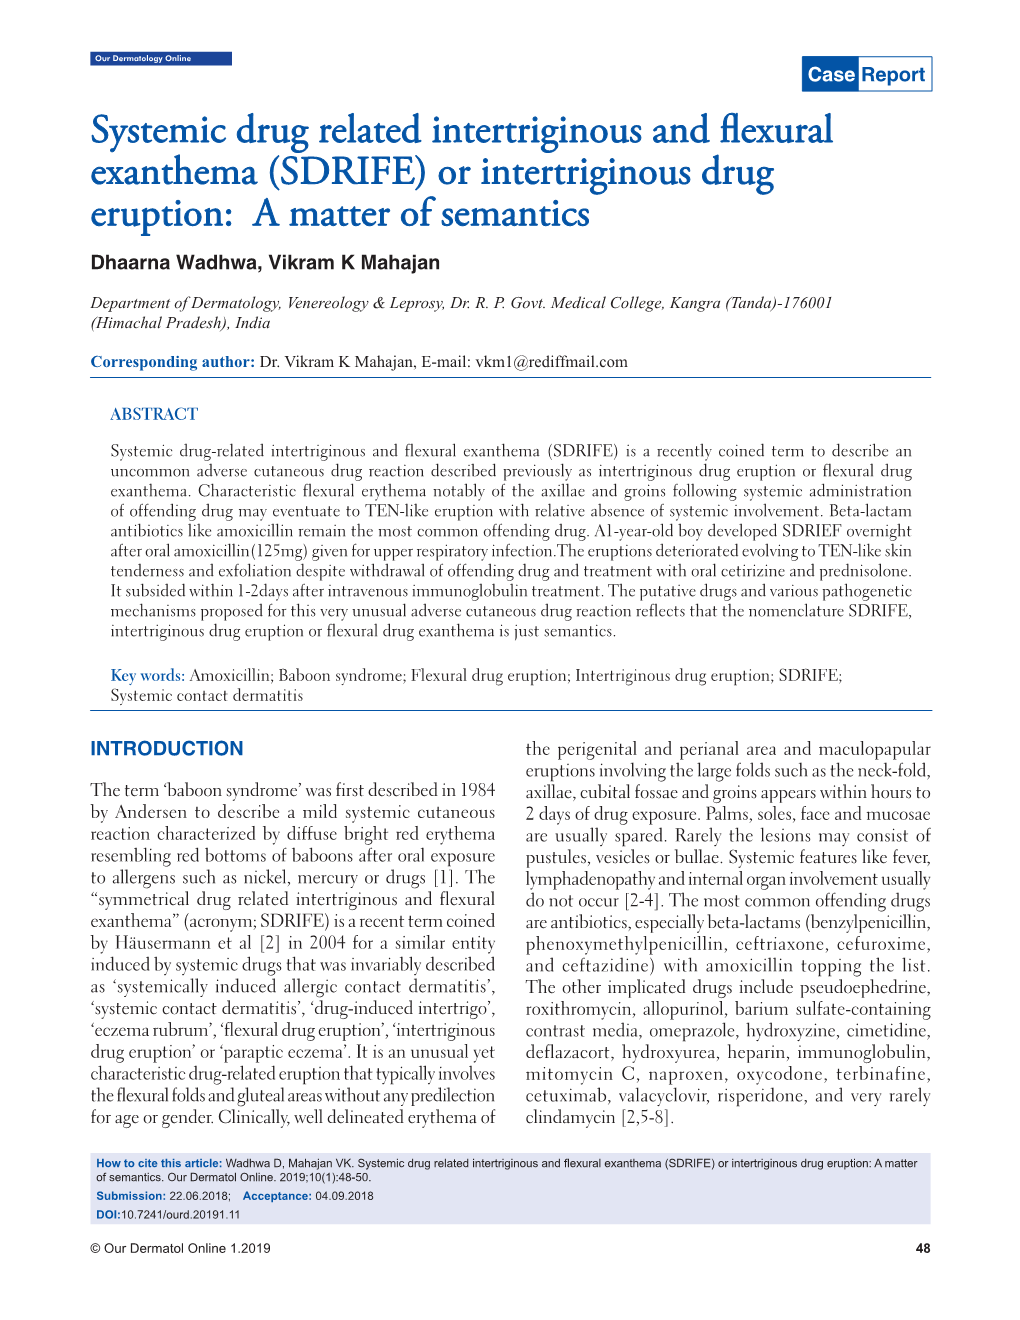 Systemic Drug Related Intertriginous and ﬂ Exural Exanthema (SDRIFE) Or Intertriginous Drug Eruption: a Matter of Semantics